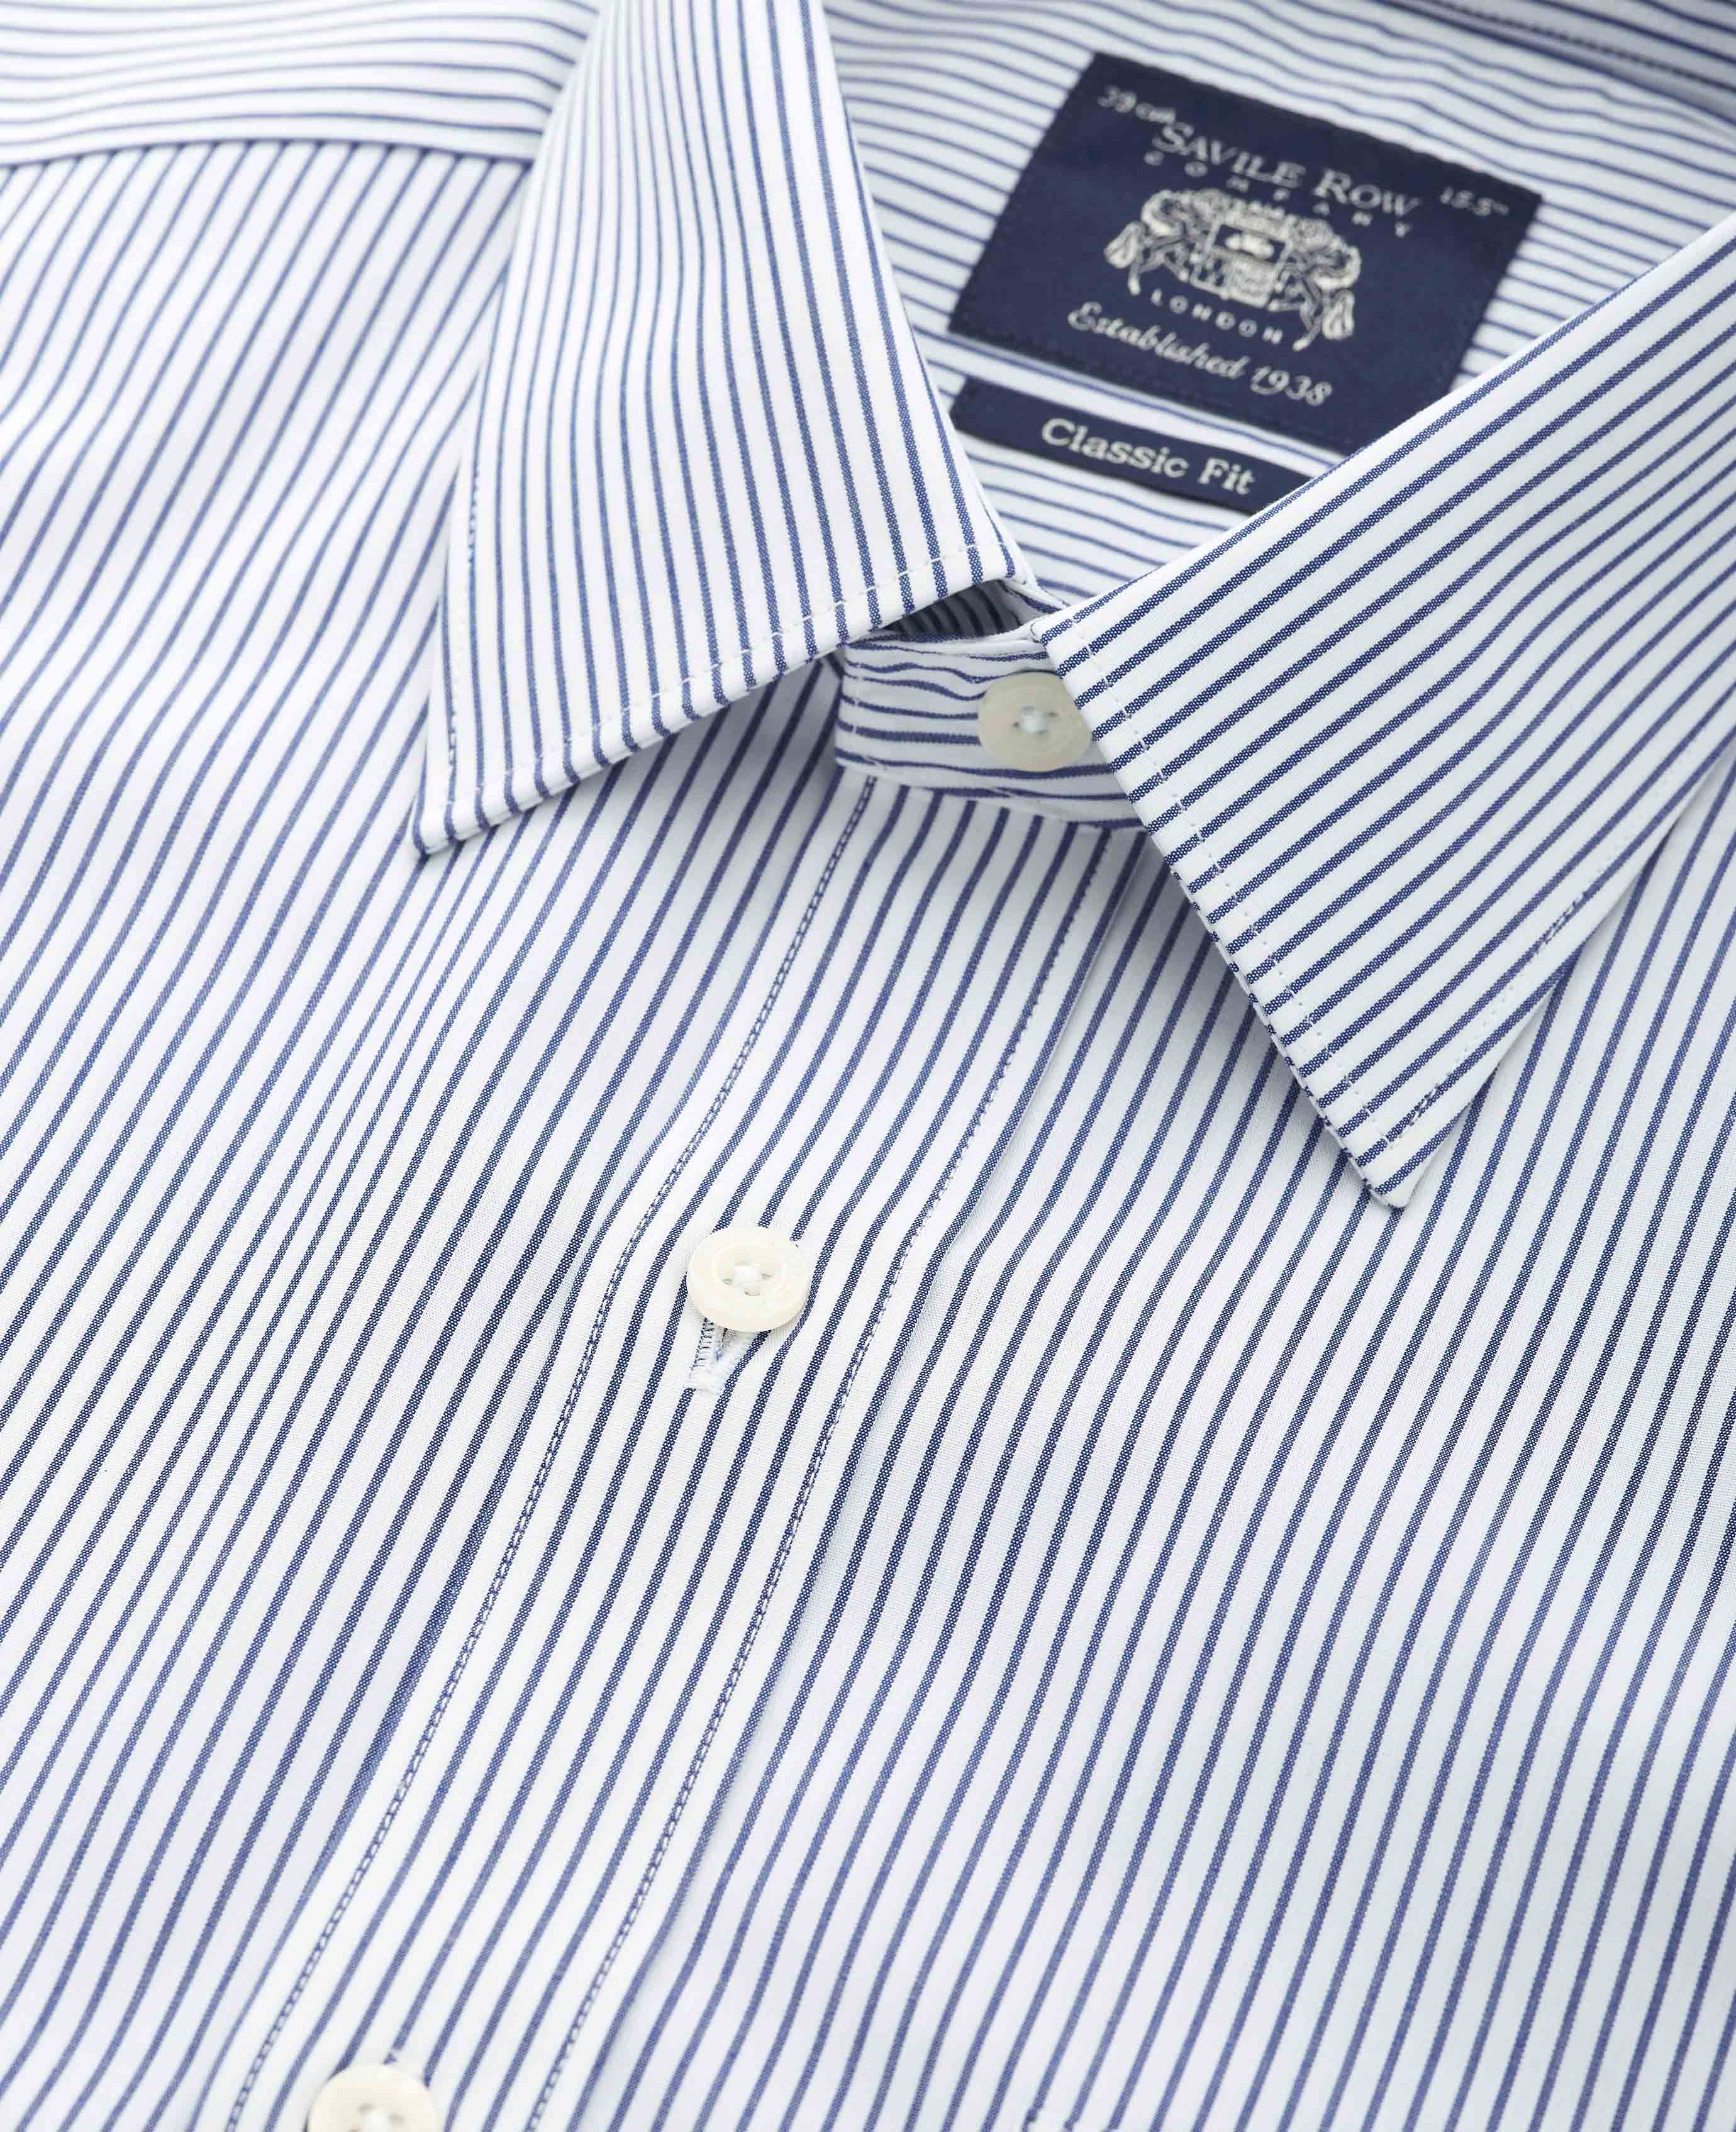 Men’s Classic Fit Fine Stripe Shirt in Navy | Savile Row Co